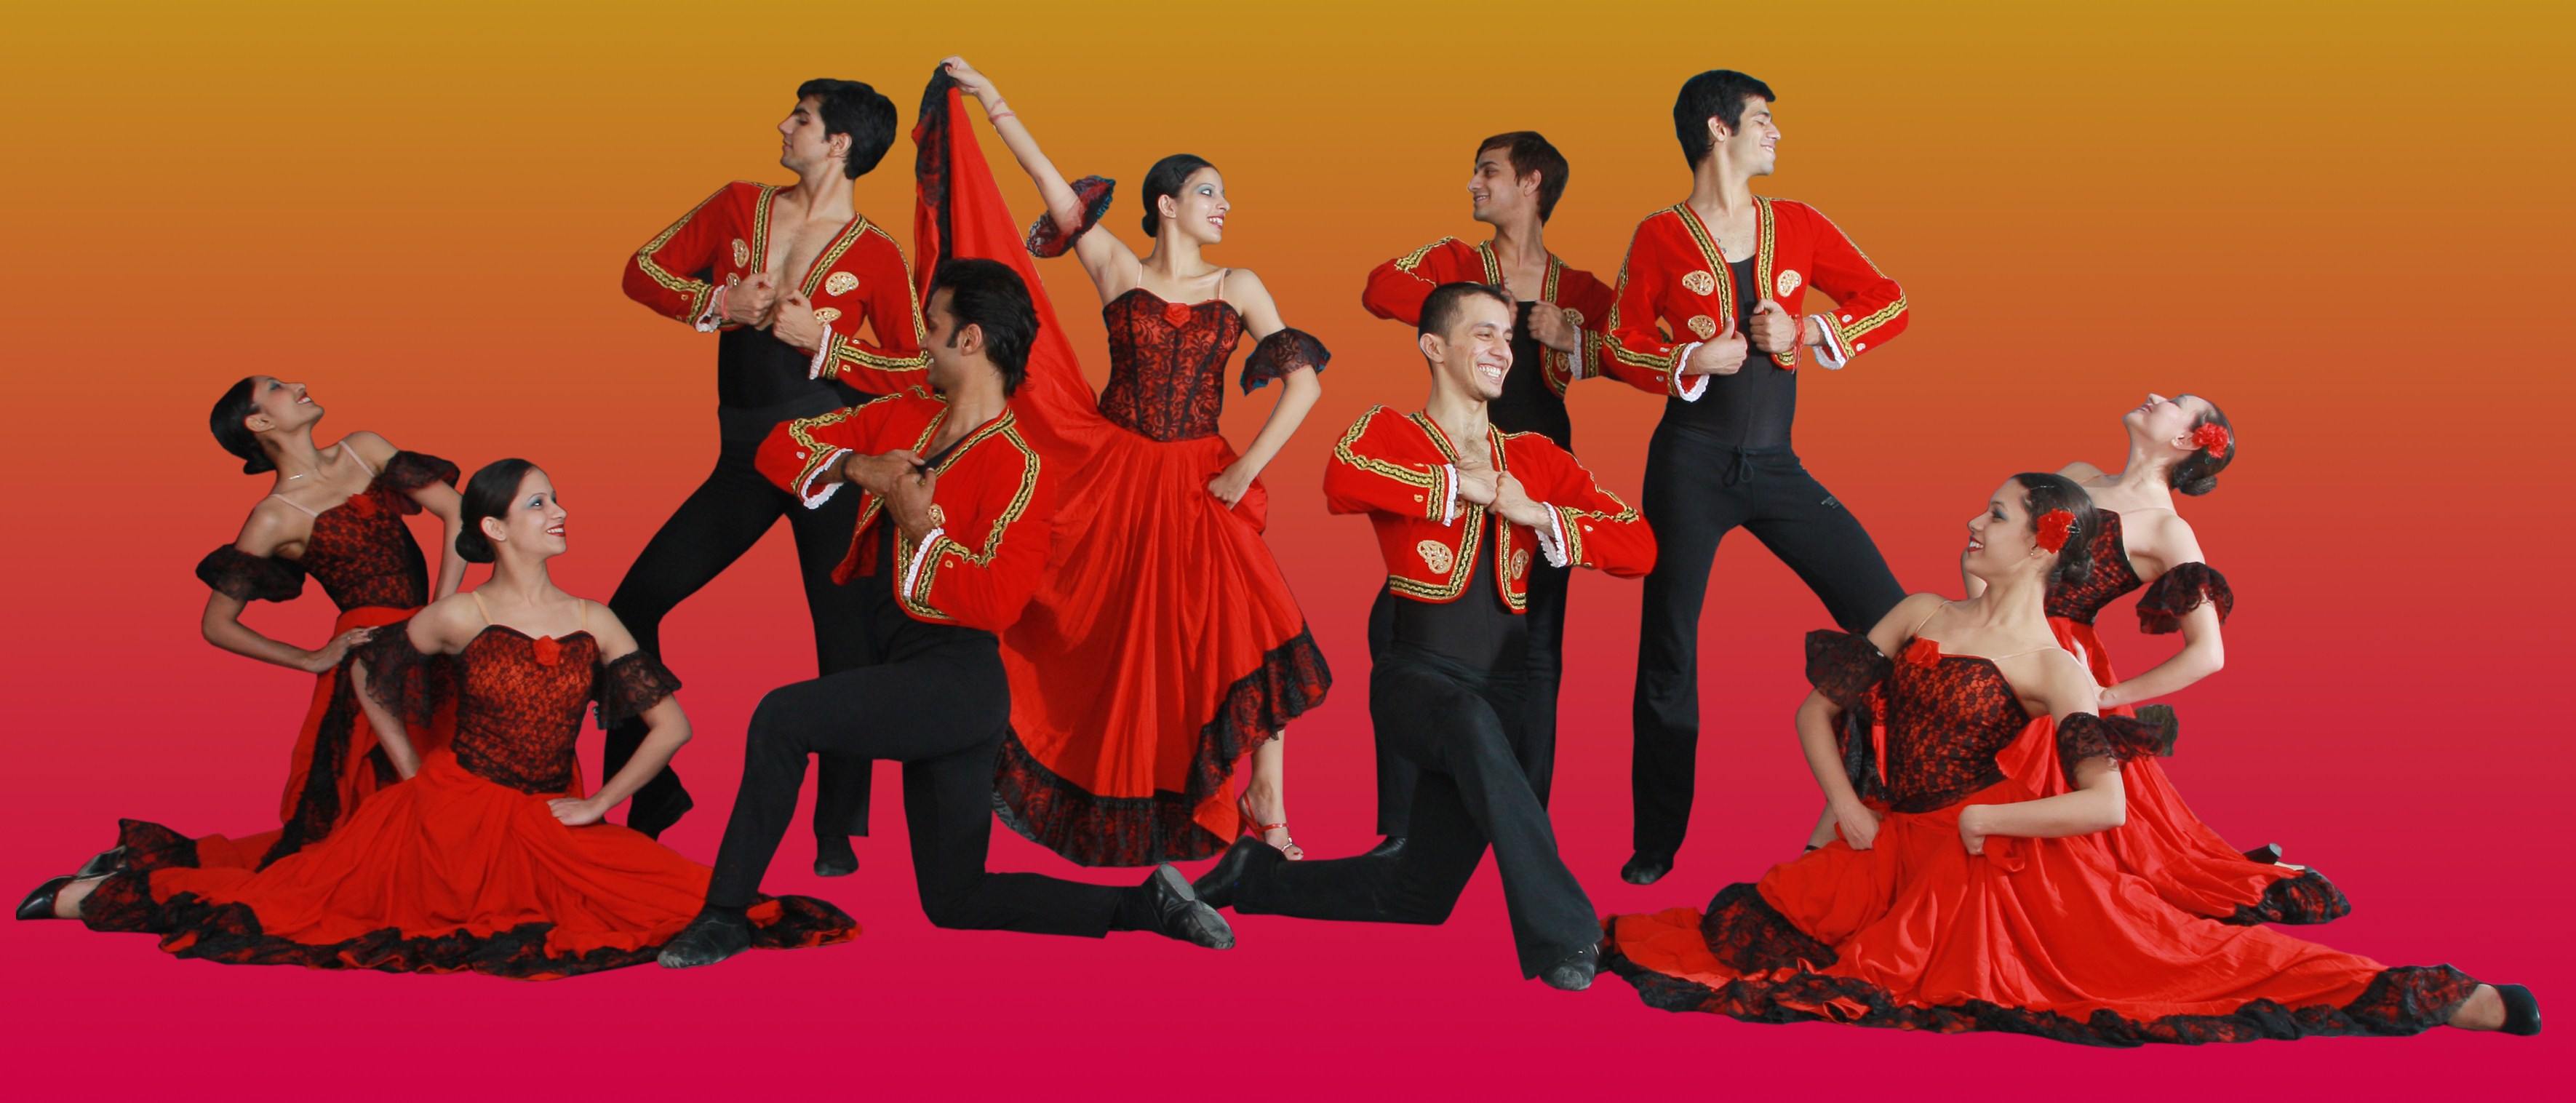 Danseuses De Flamenco Wallpaper